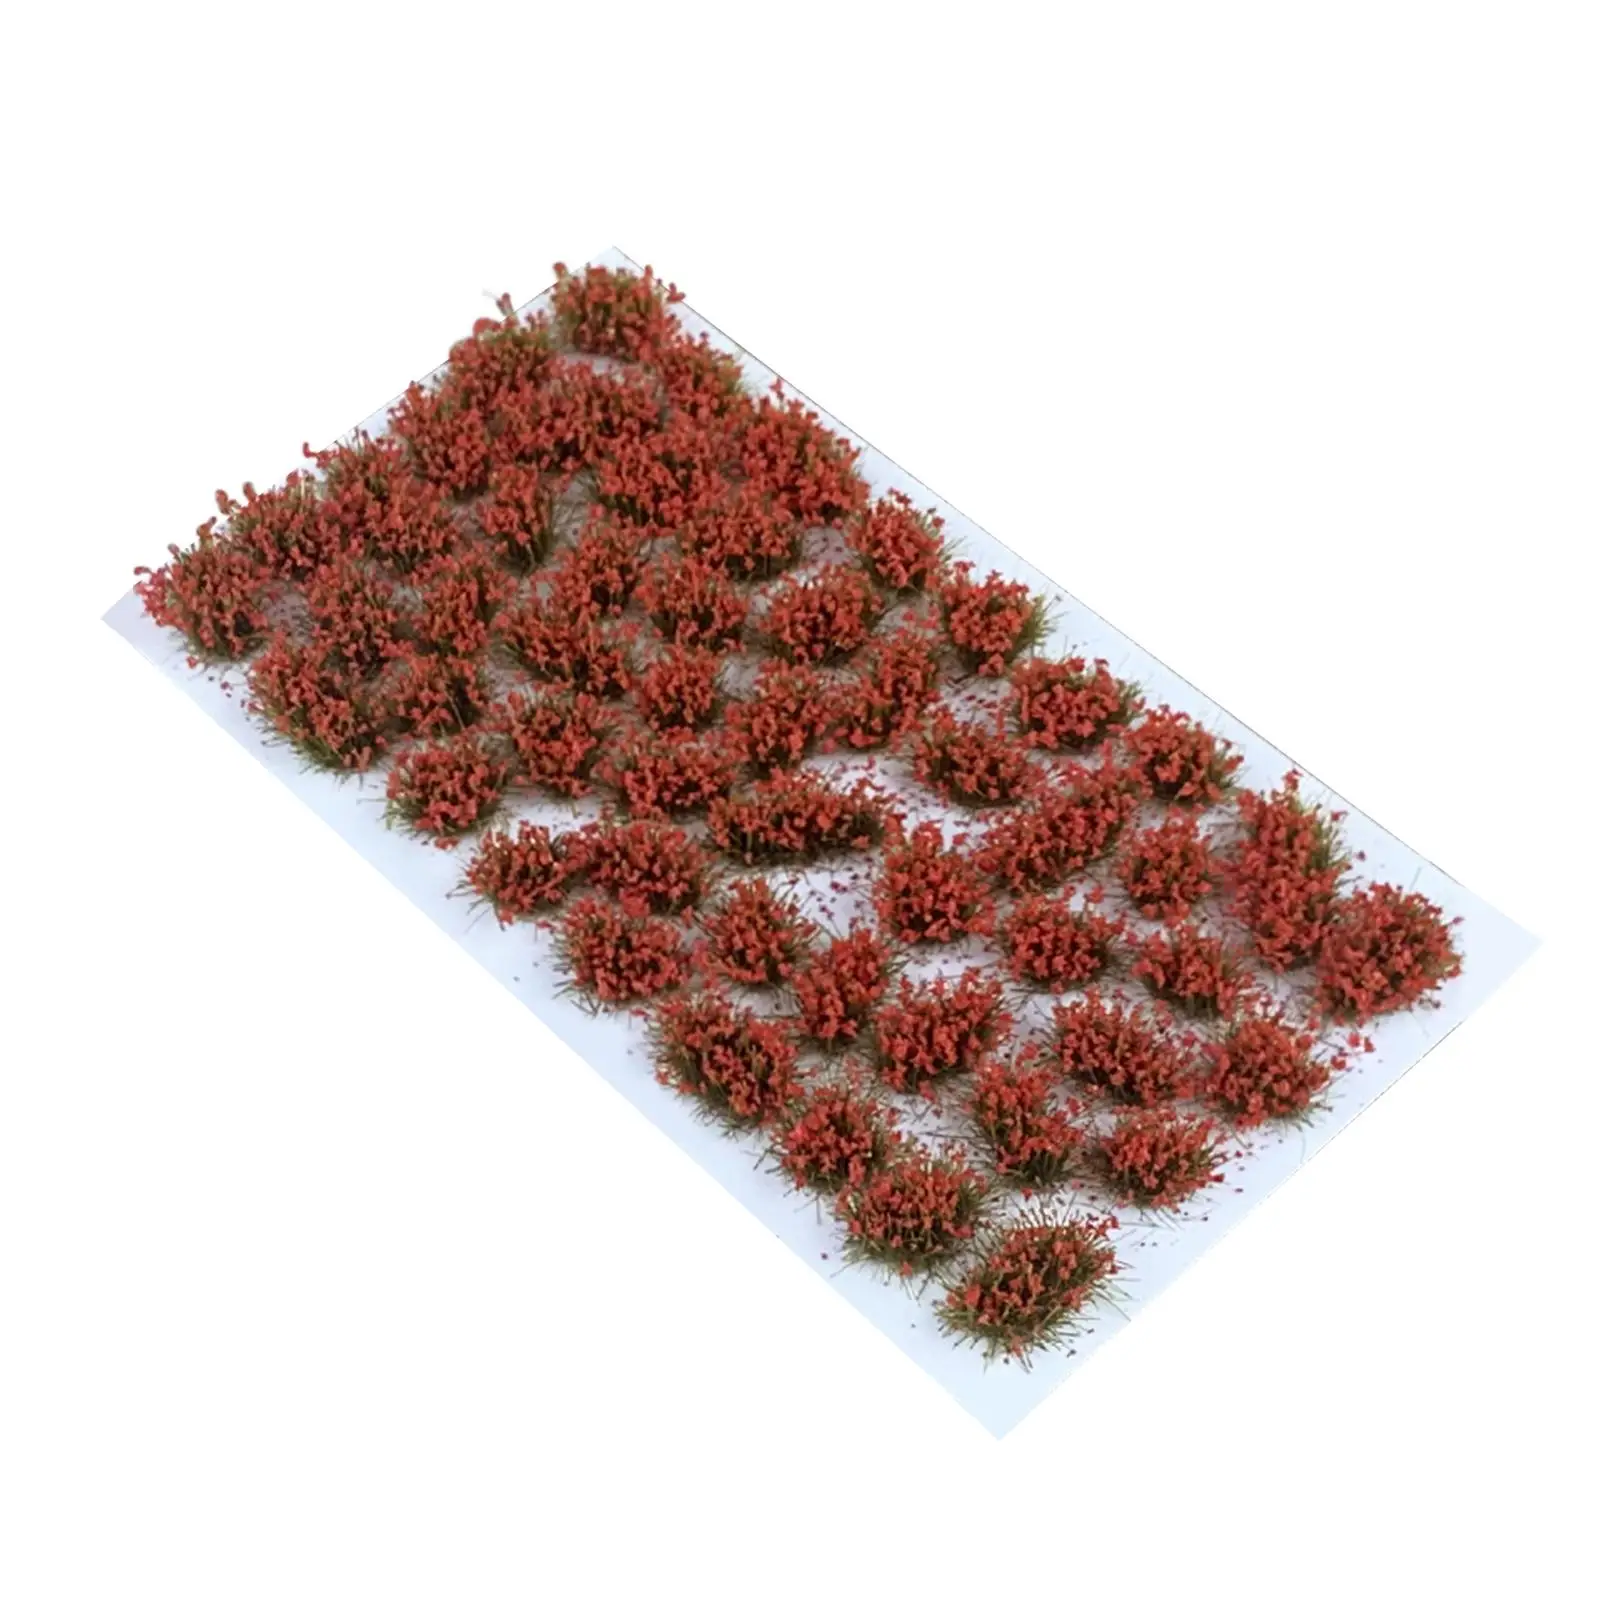 DIY Miniature Flower Cluster, Flower Vegetation Groups Grass Tufts Model for Architectural Model Layout